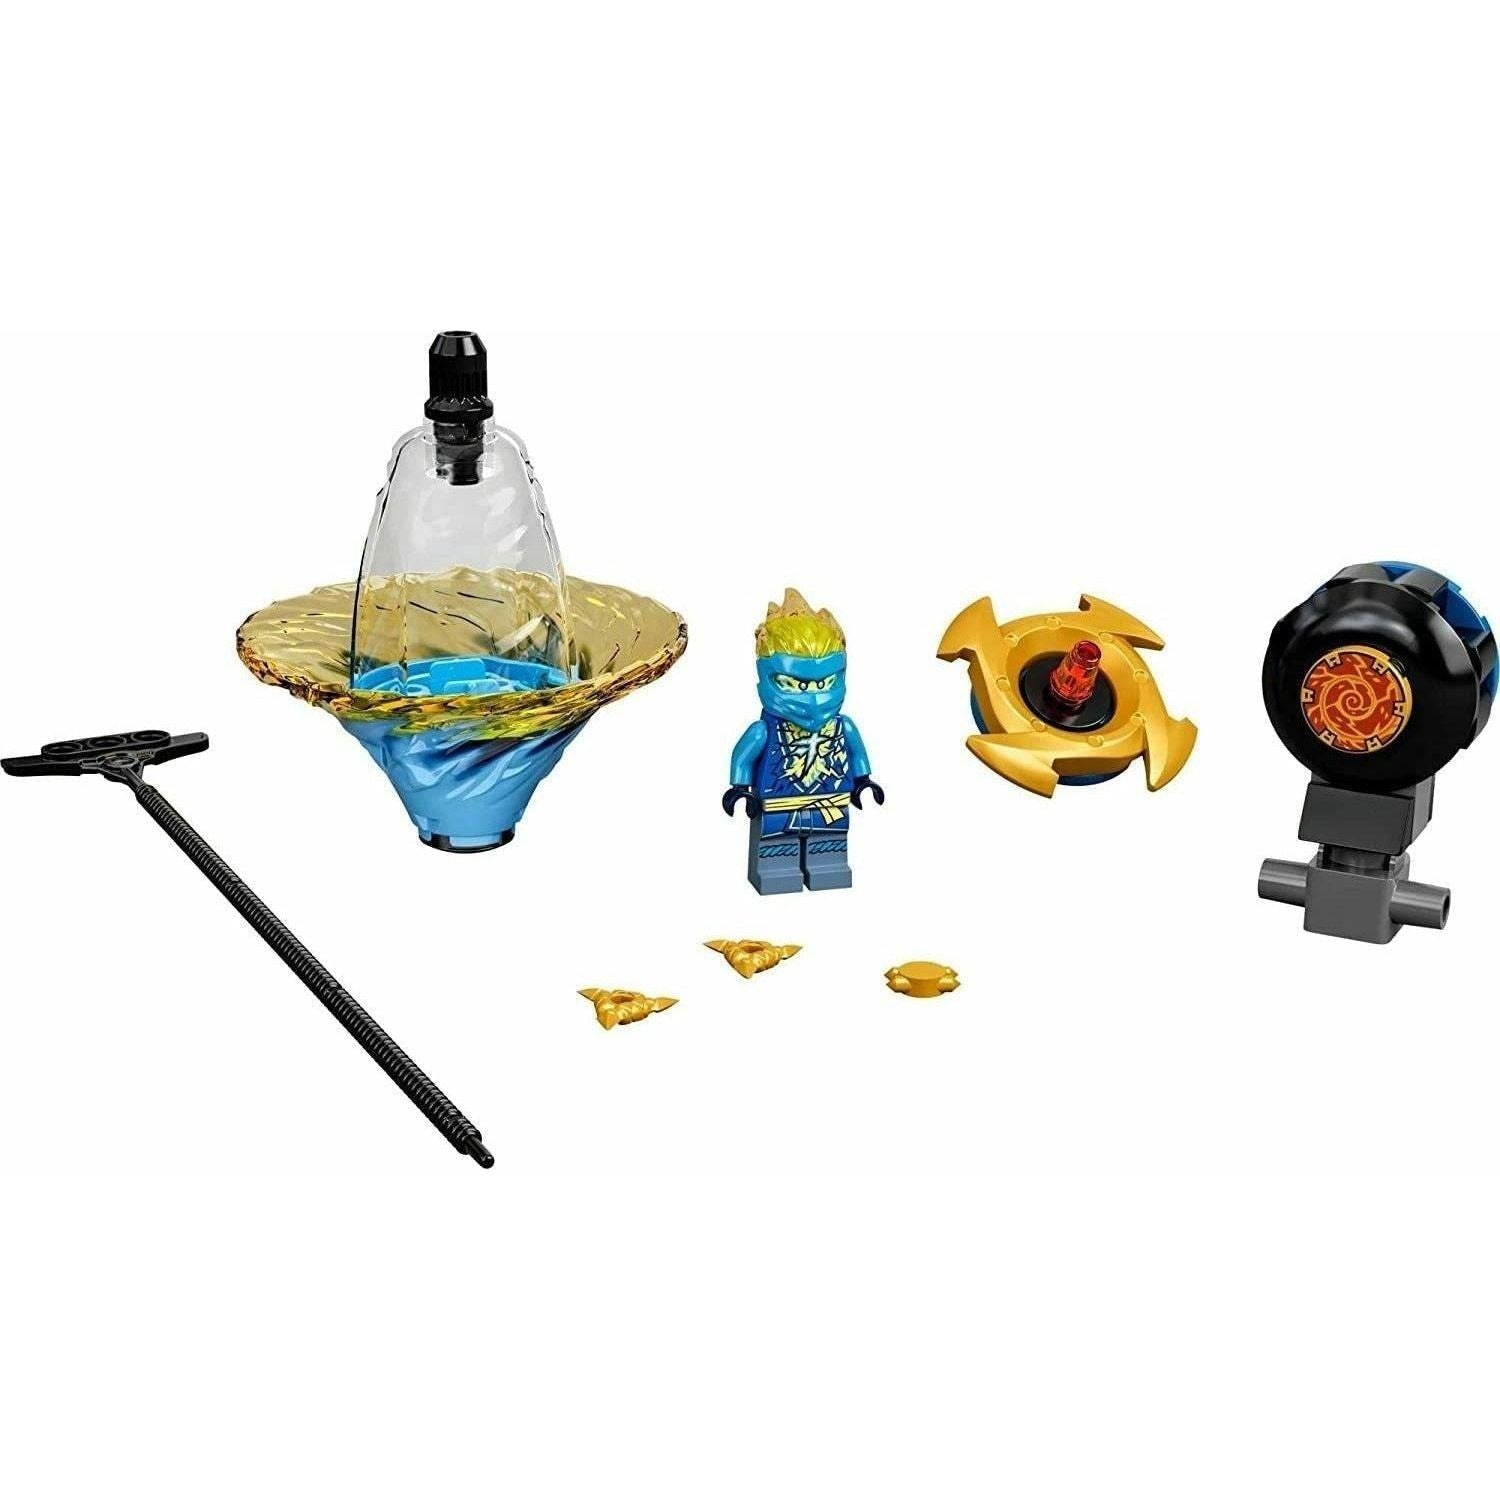 LEGO Ninjago 70690 Jay’s Spinjitzu Ninja Training Spinning Toy (25 Pieces) - BumbleToys - 5-7 Years, 8+ Years, Boys, LEGO, Ninjago, OXE